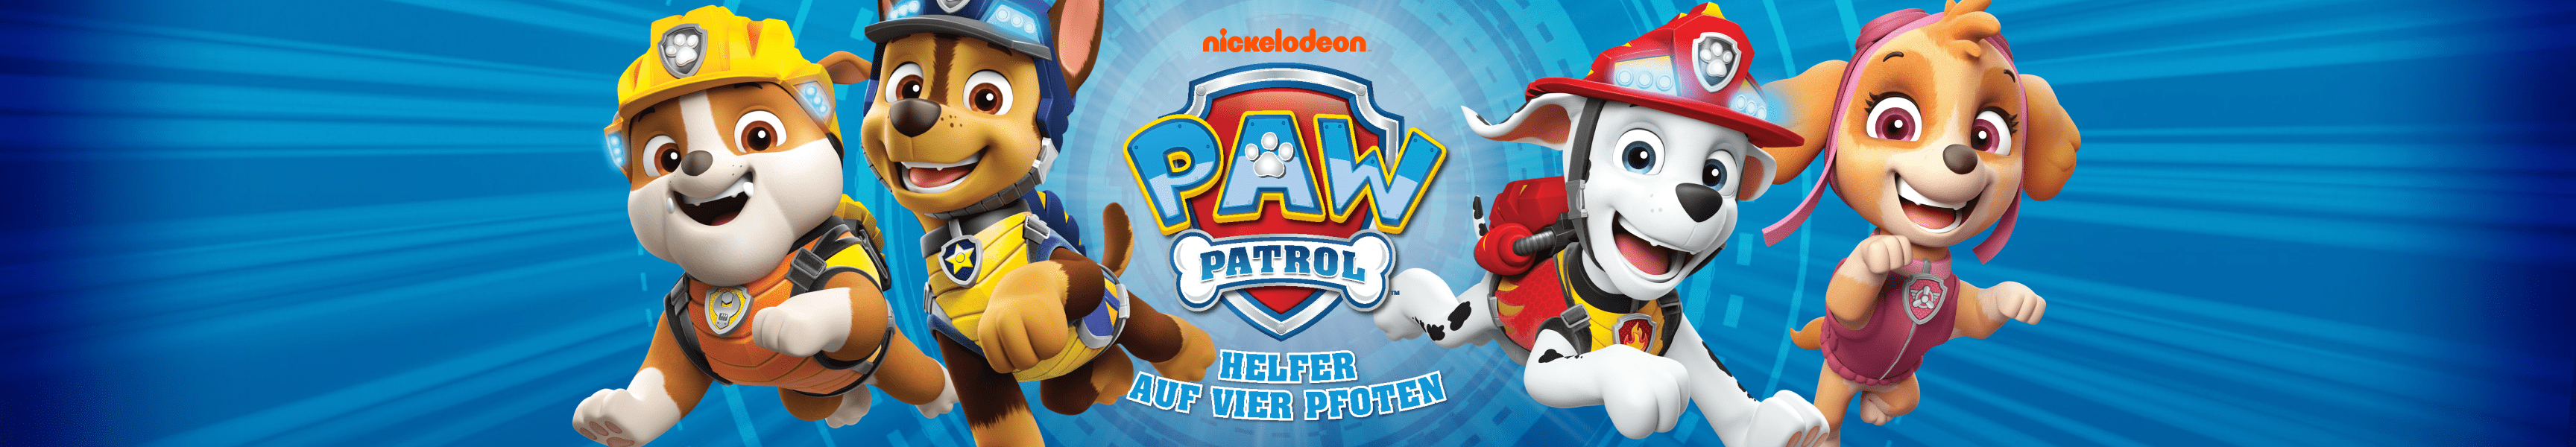 PAW Patrol Novedades